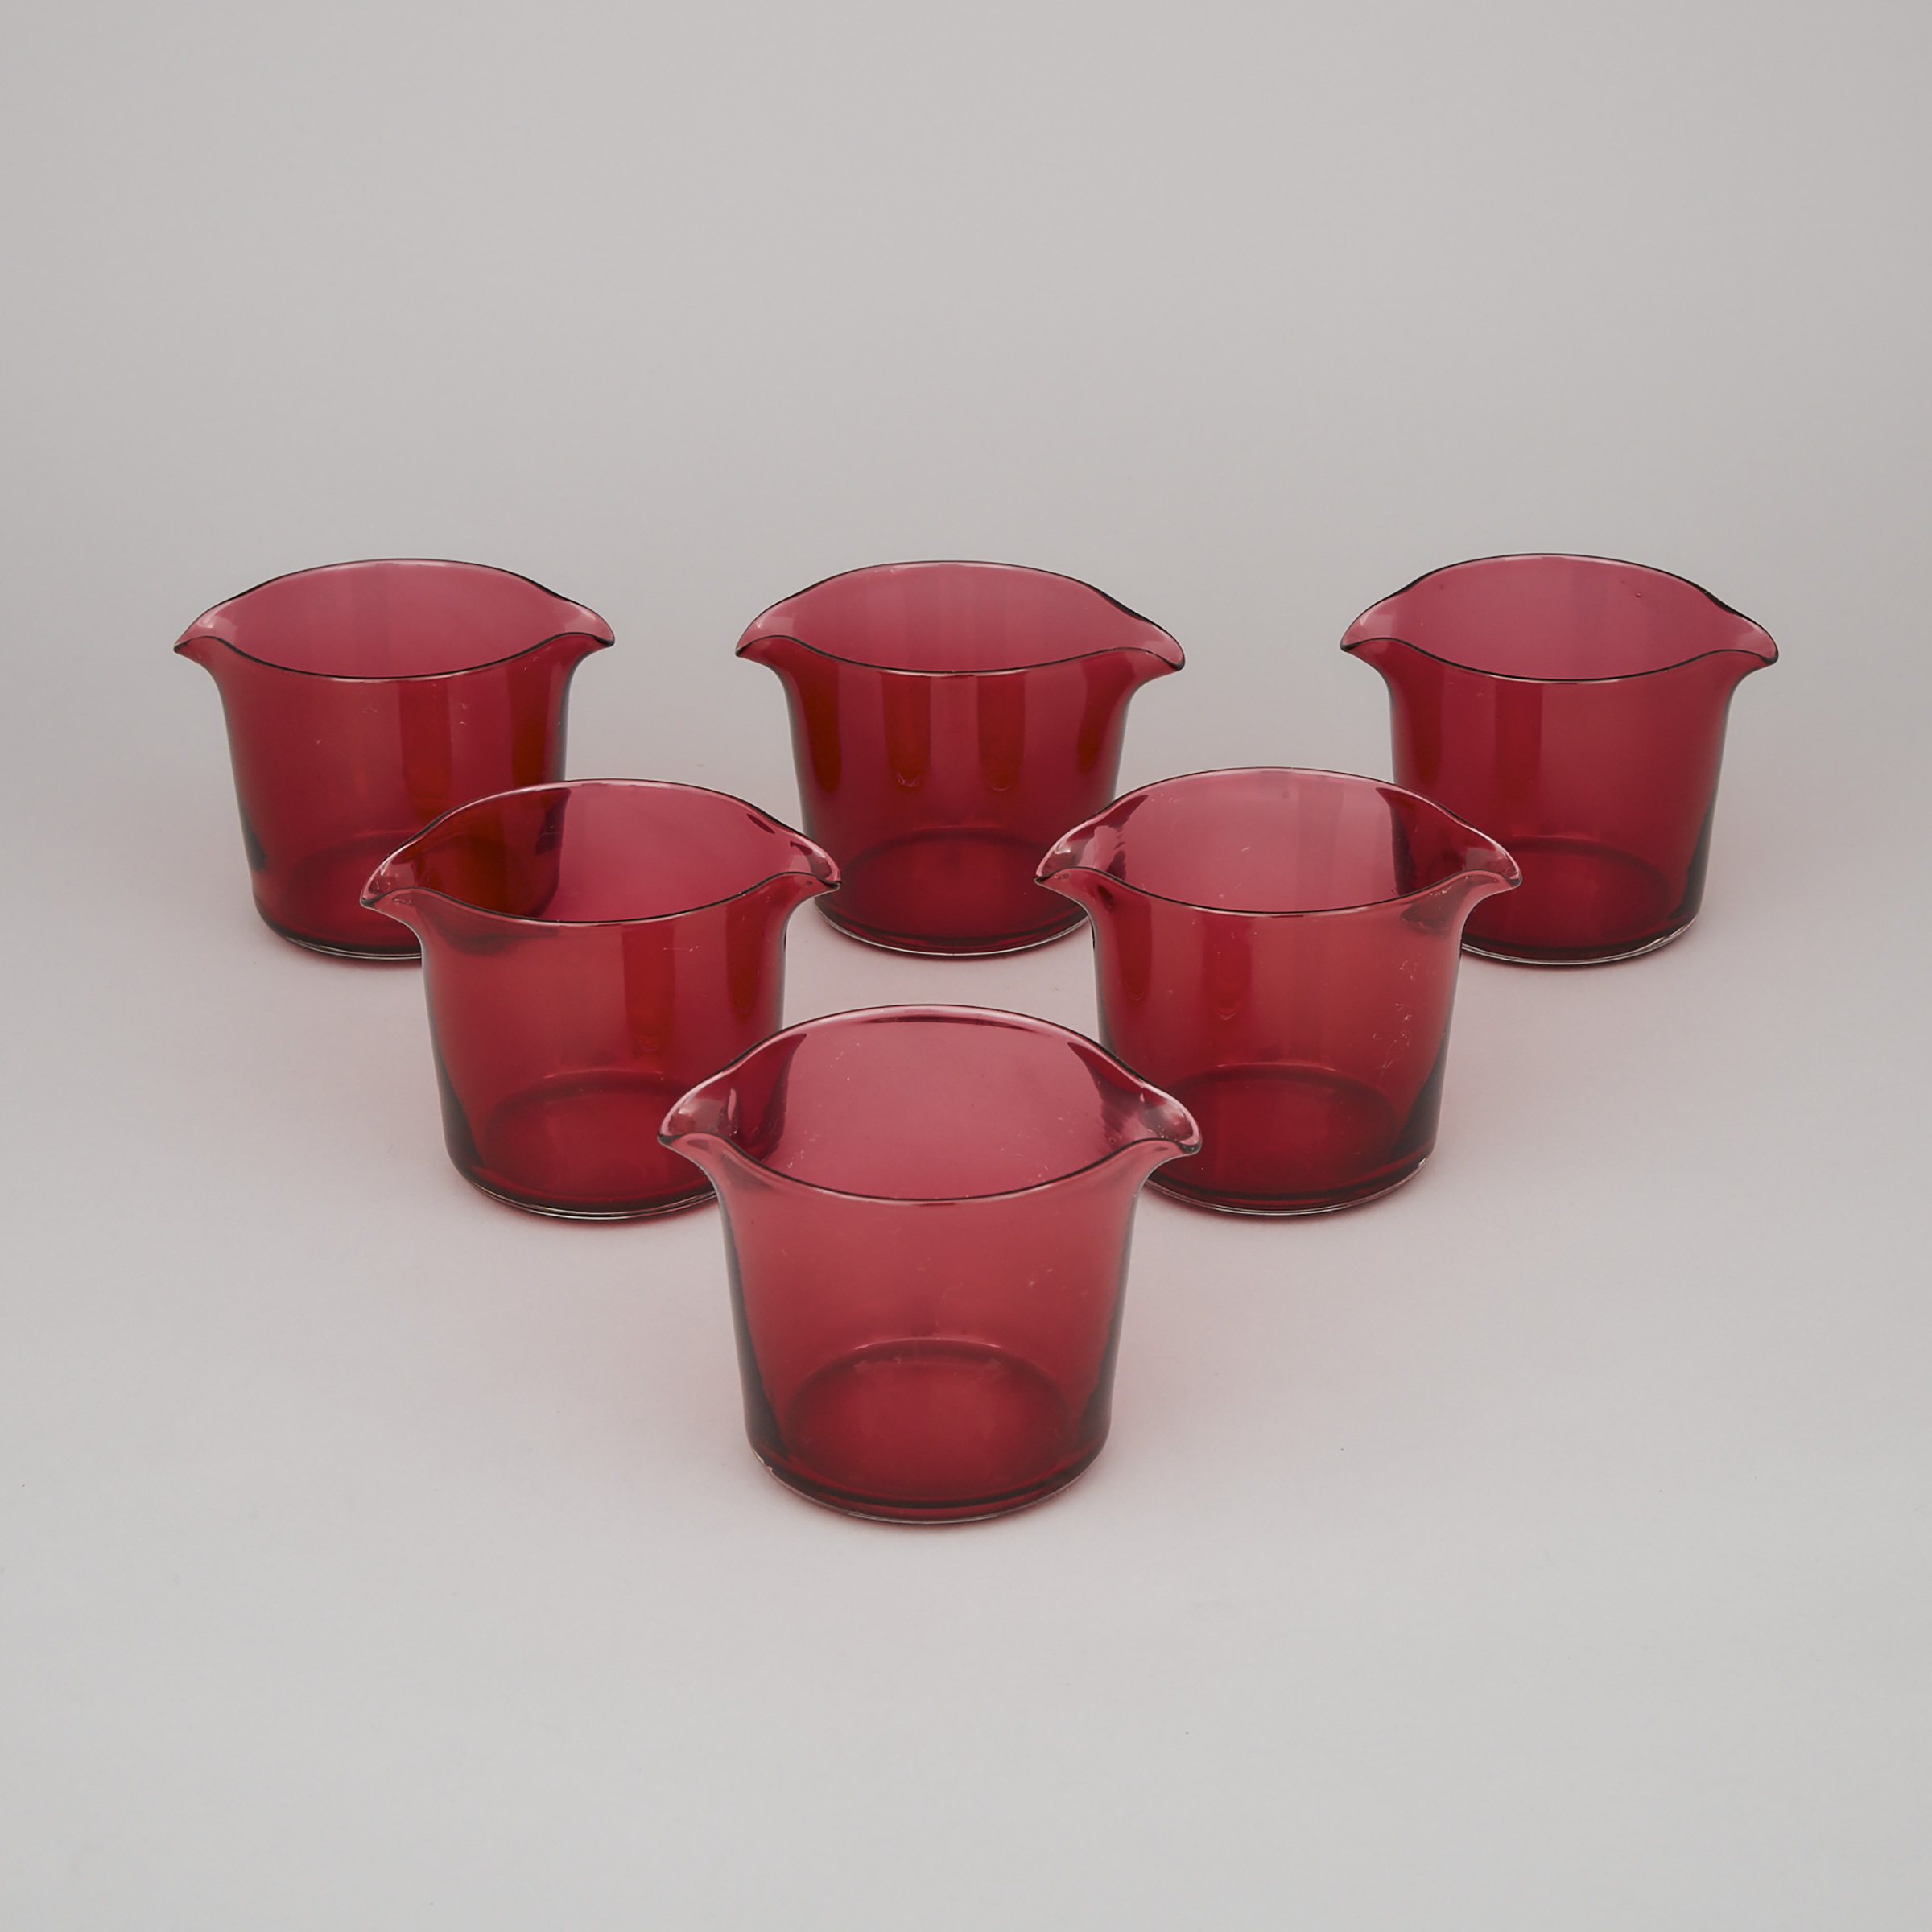 Six English Red Glass Rinsing Bowls, 19th century